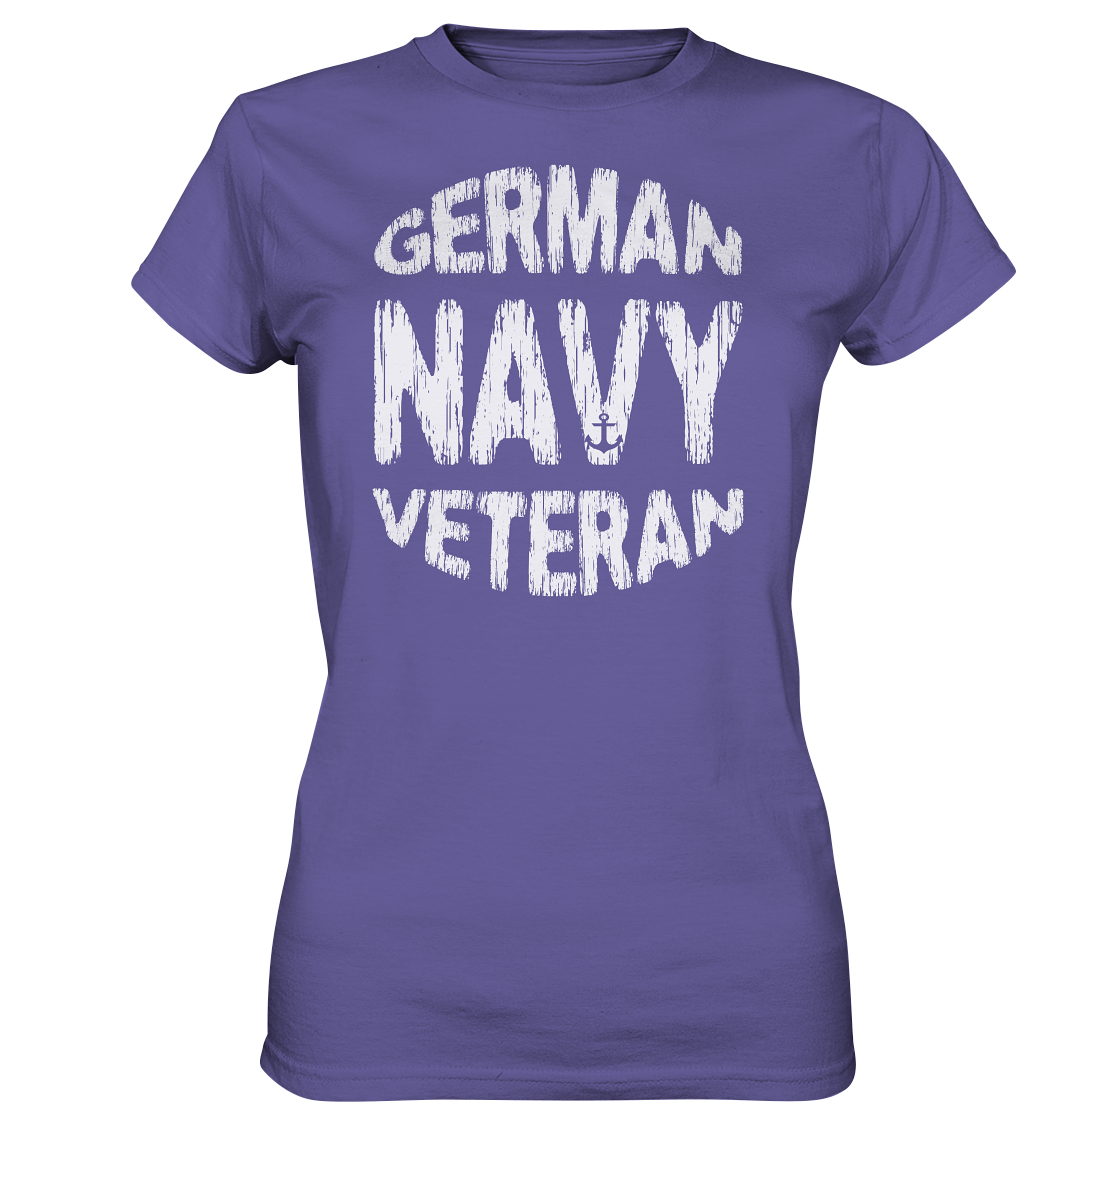 German Navy Veteran Anker - Ladies Premium Shirt